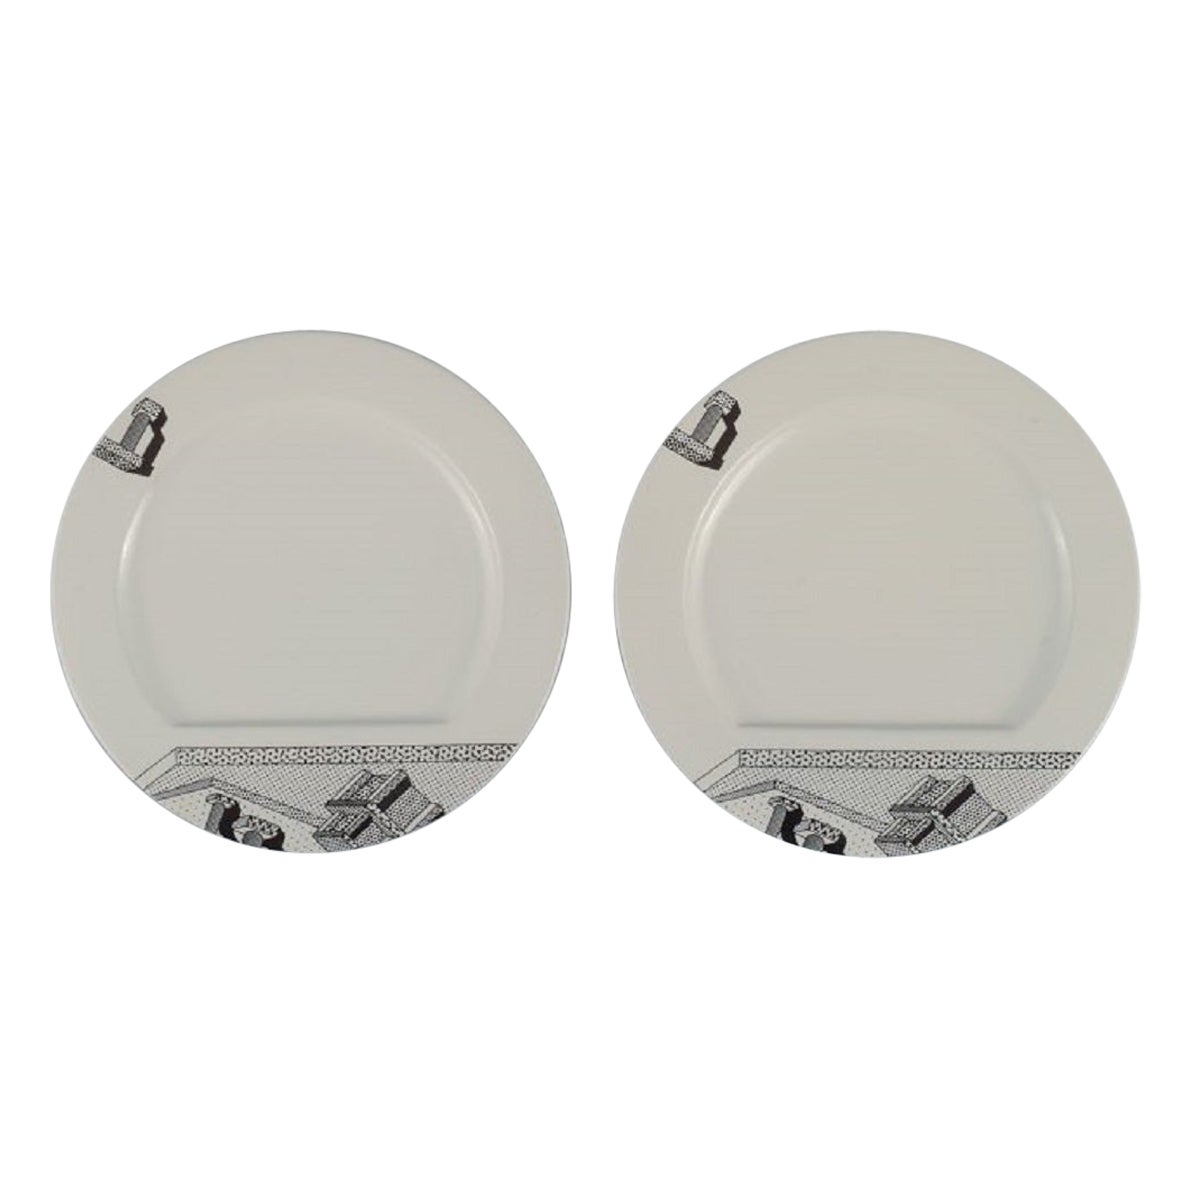 Ettore Sottsass for Flavia Memphis Milano, Futuristic Porcelain Plates